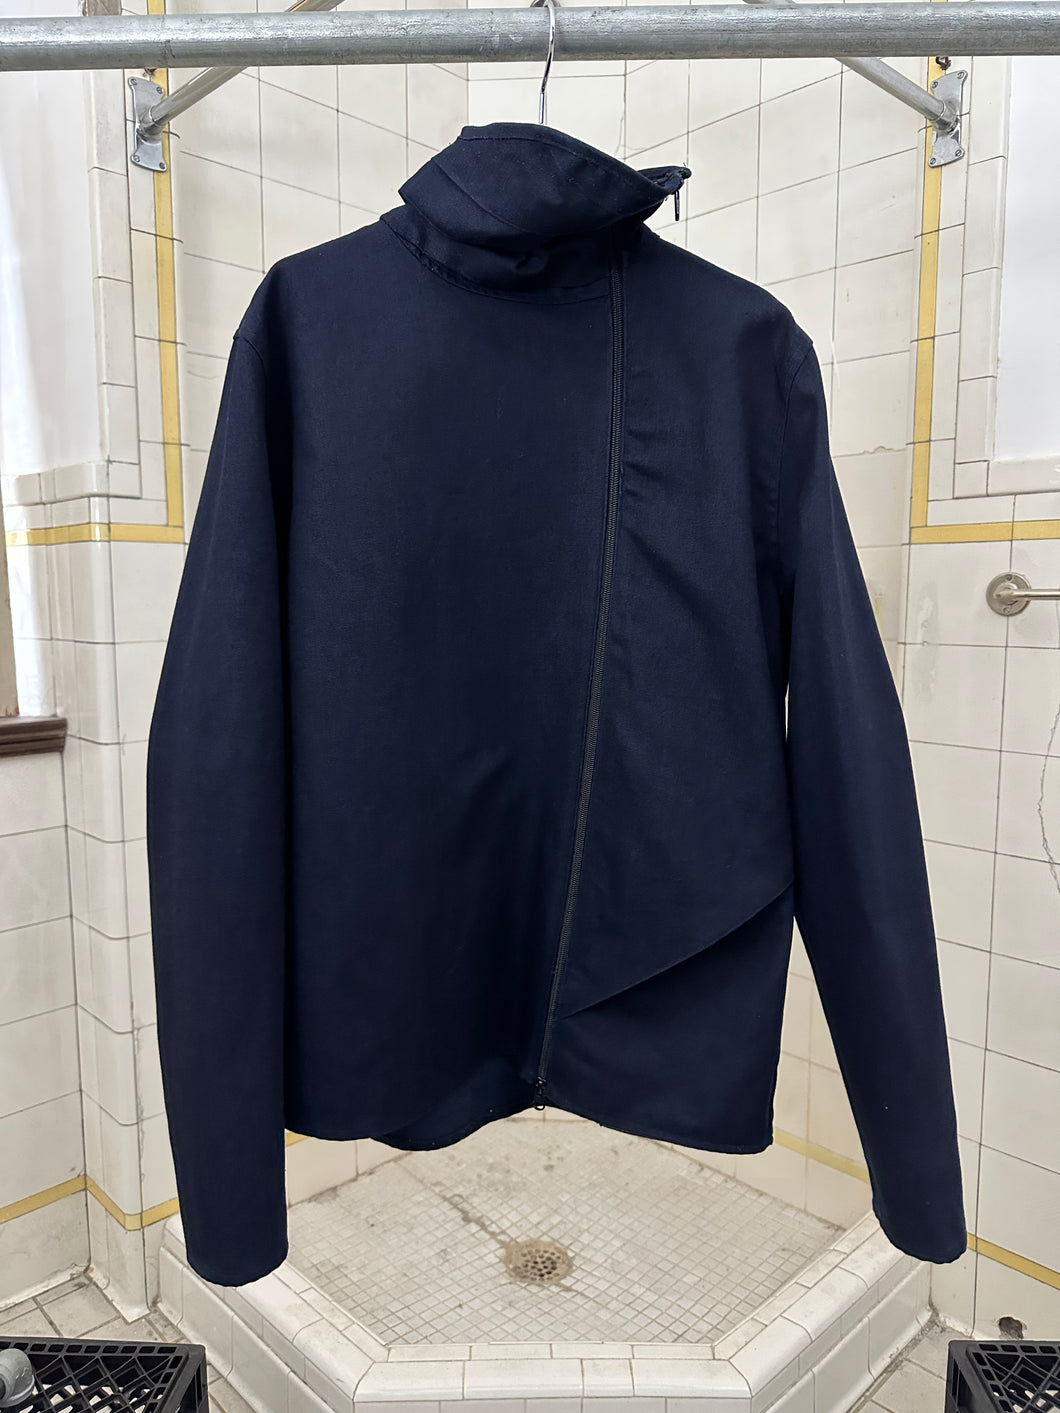 1990s Vexed Generation 'Pleatface' Jacket in Stretch Denim - Size L